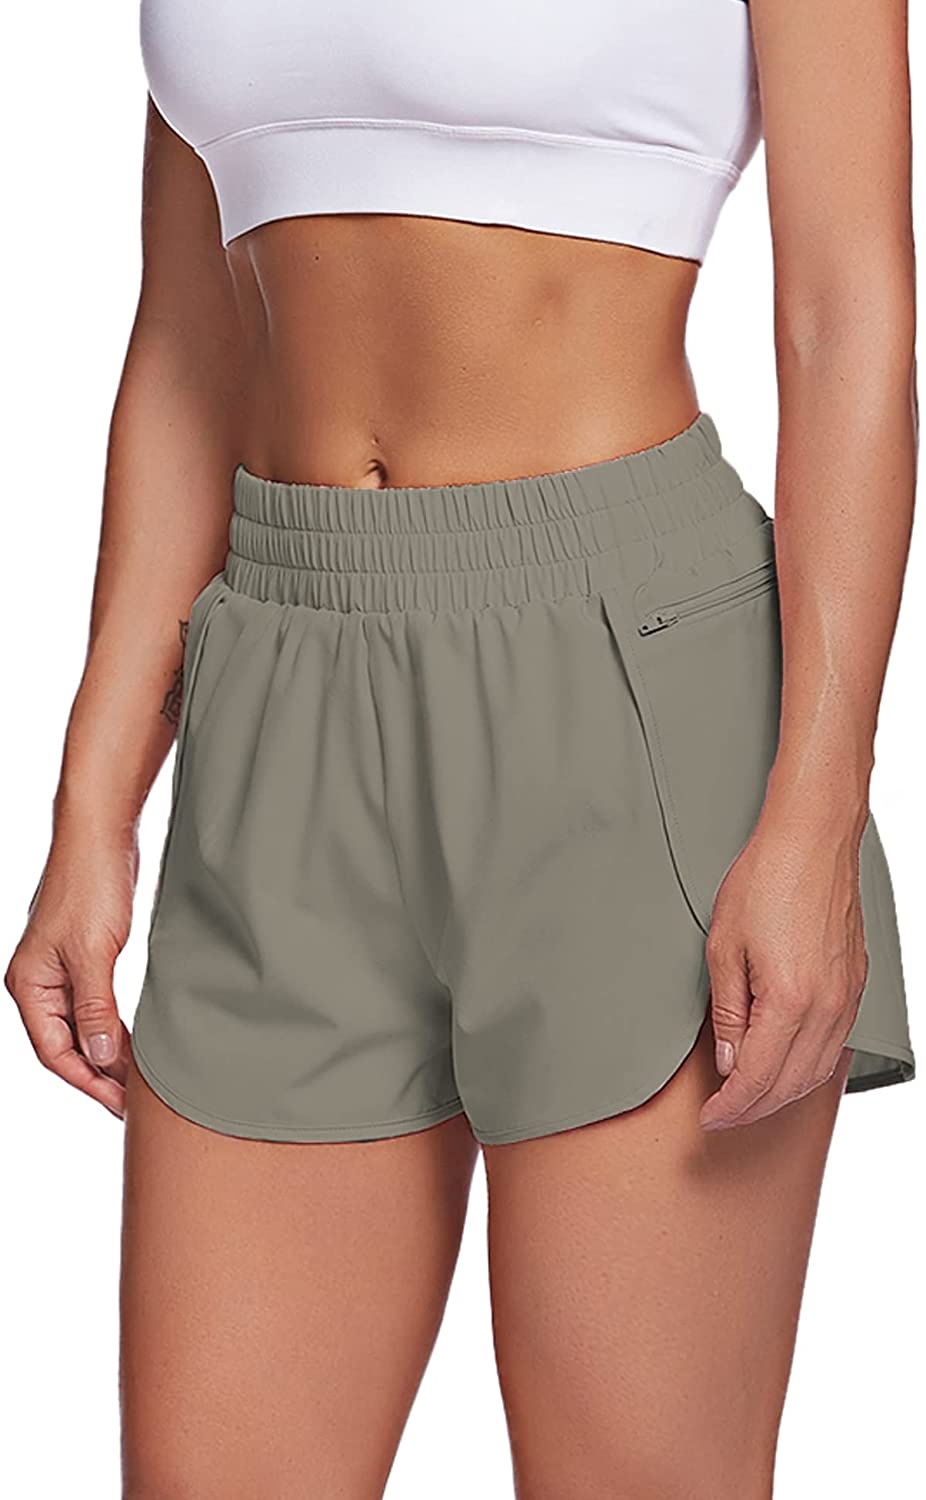 LaLaLa Womens Workout Shorts with Zip Pocket Quick-Dry Athletic Shorts  Sports El | eBay